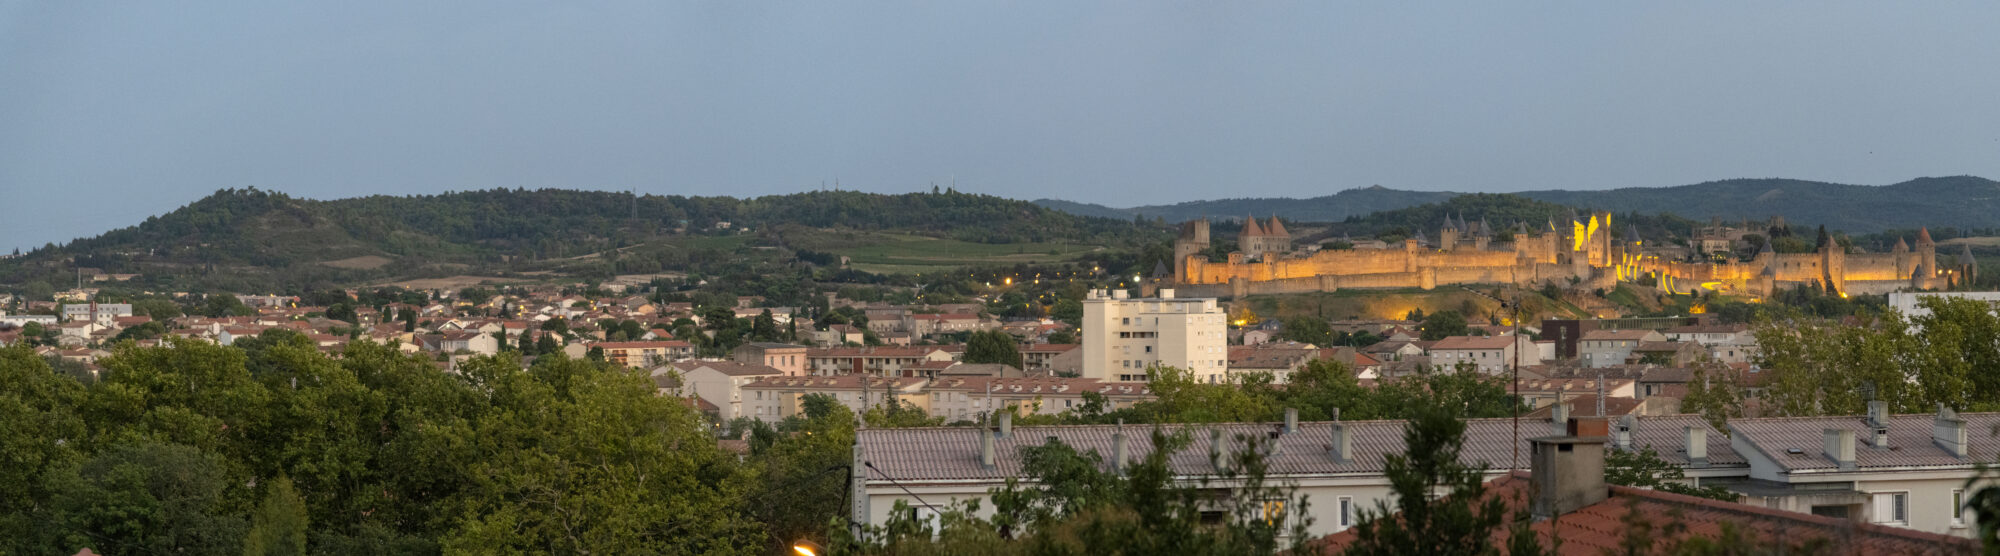 Carcassonne (01)